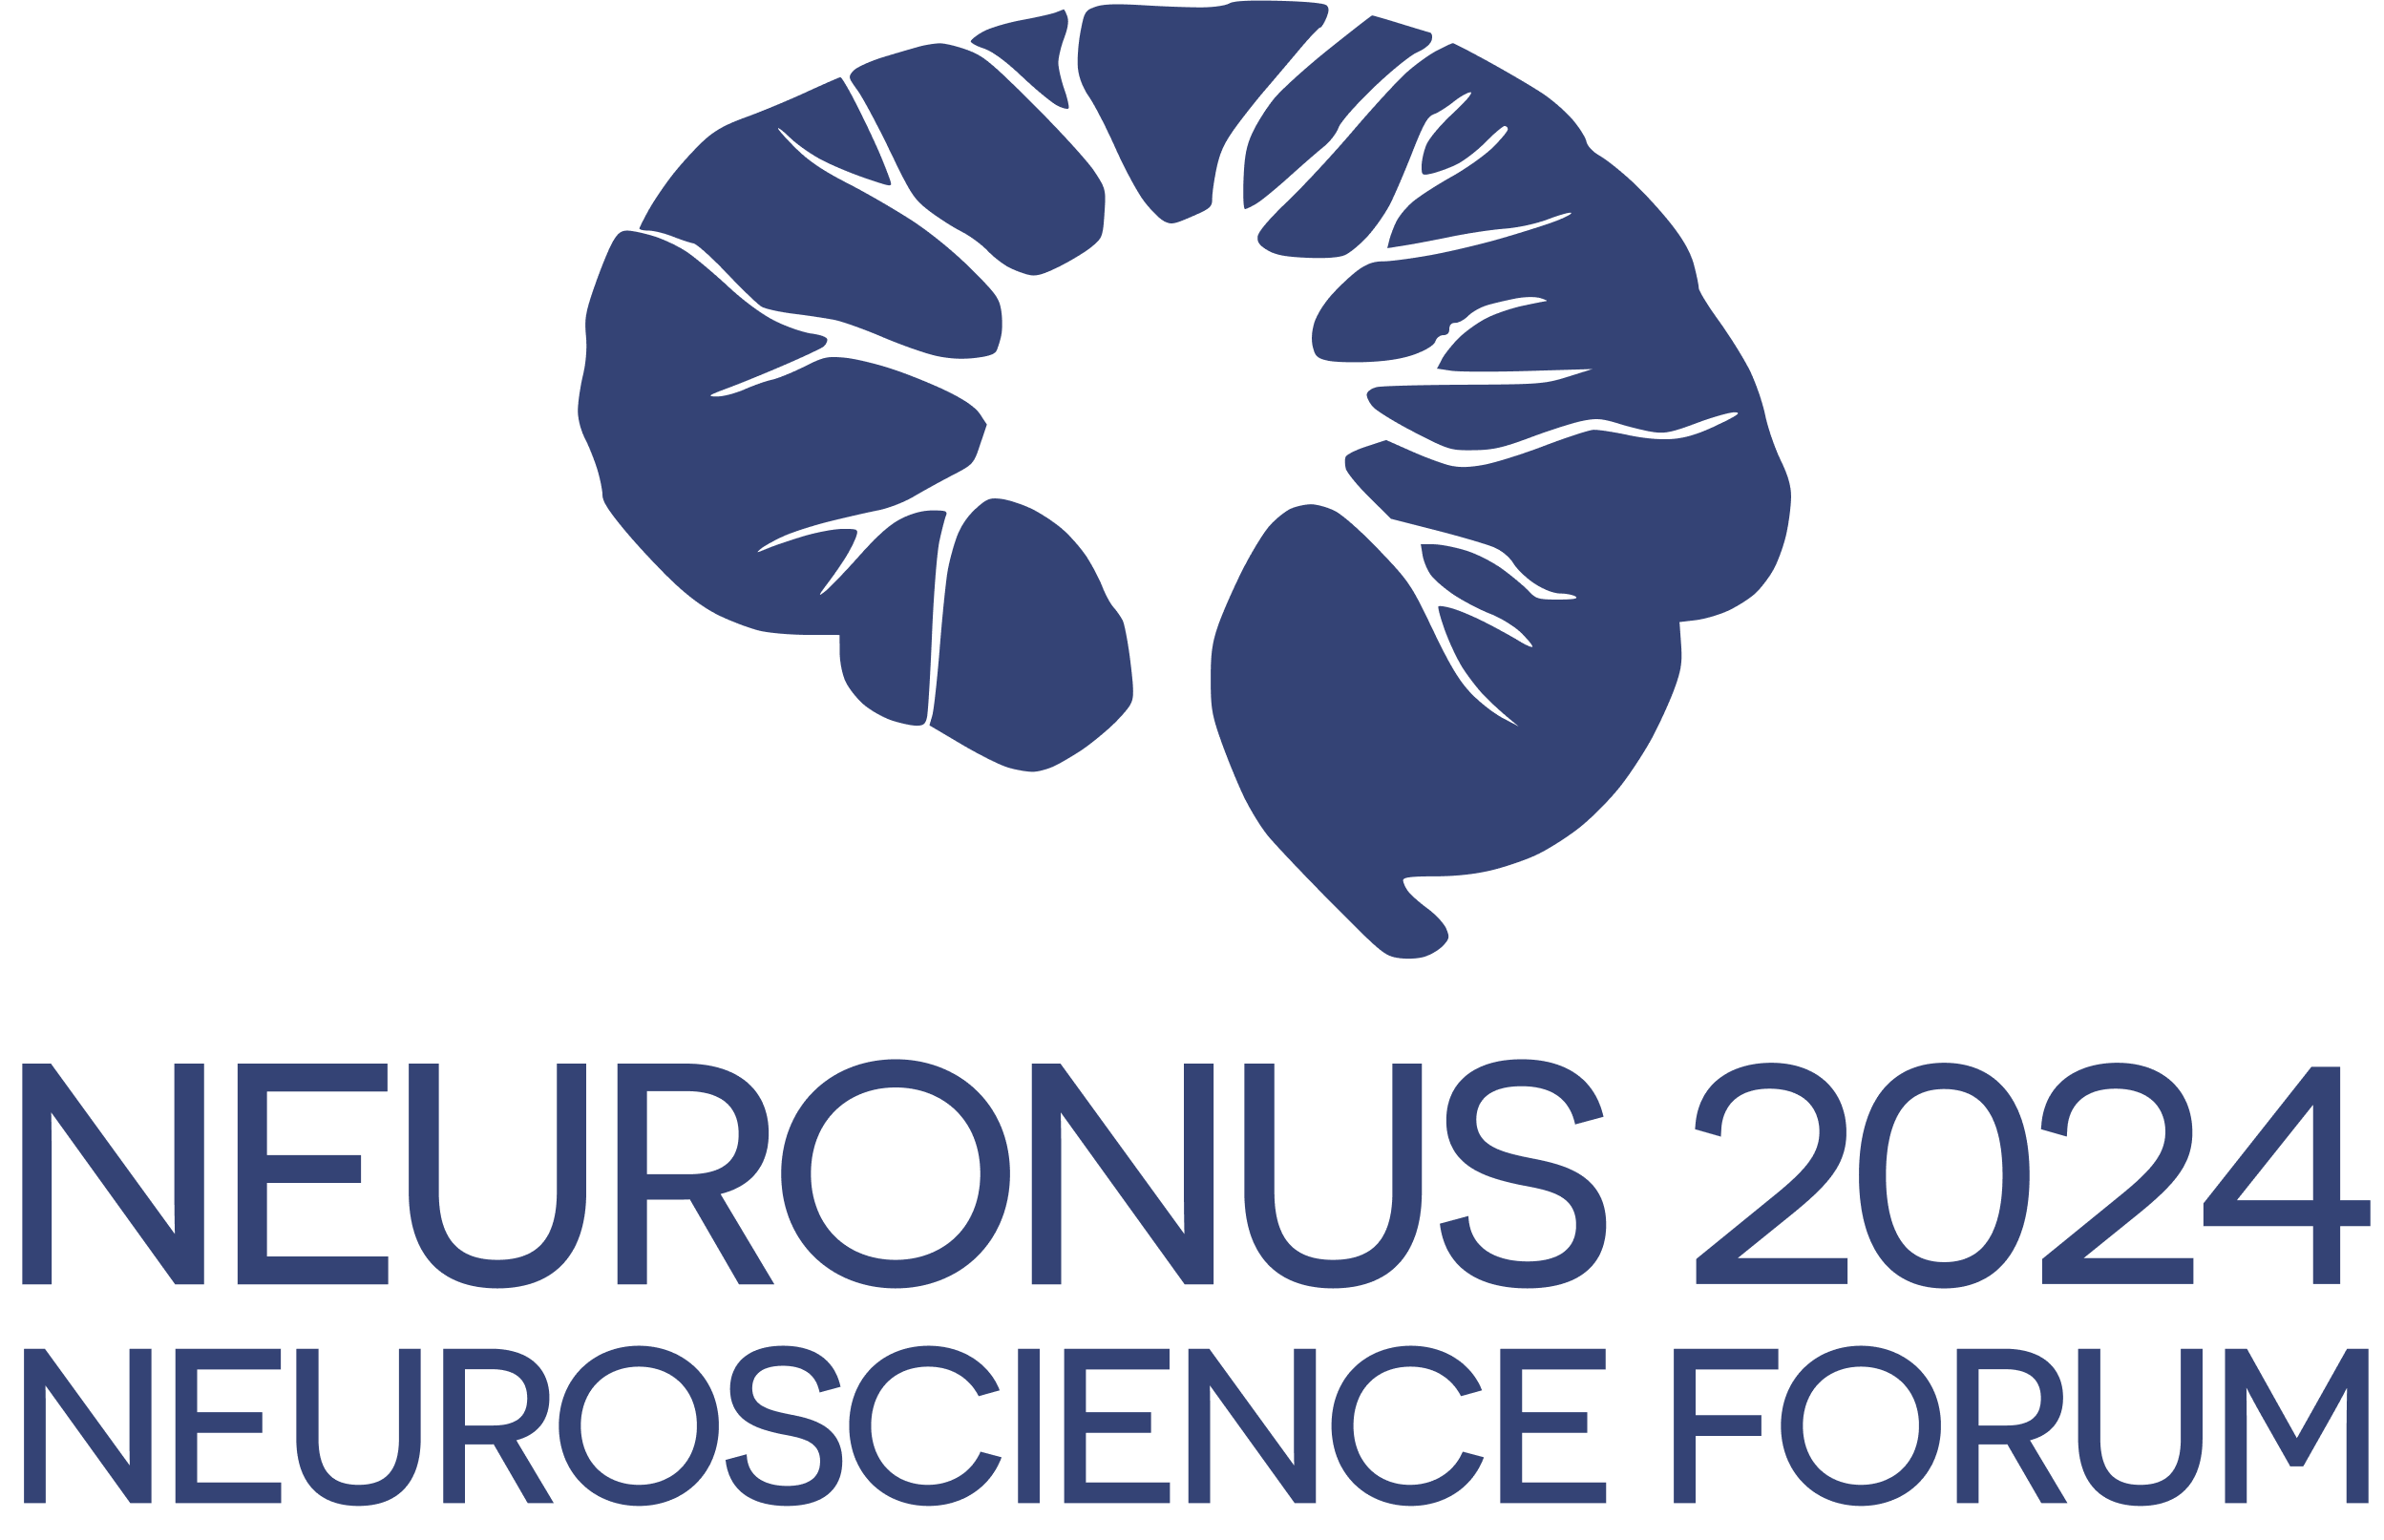 Neuronus Neuroscience Forum 2012-2022